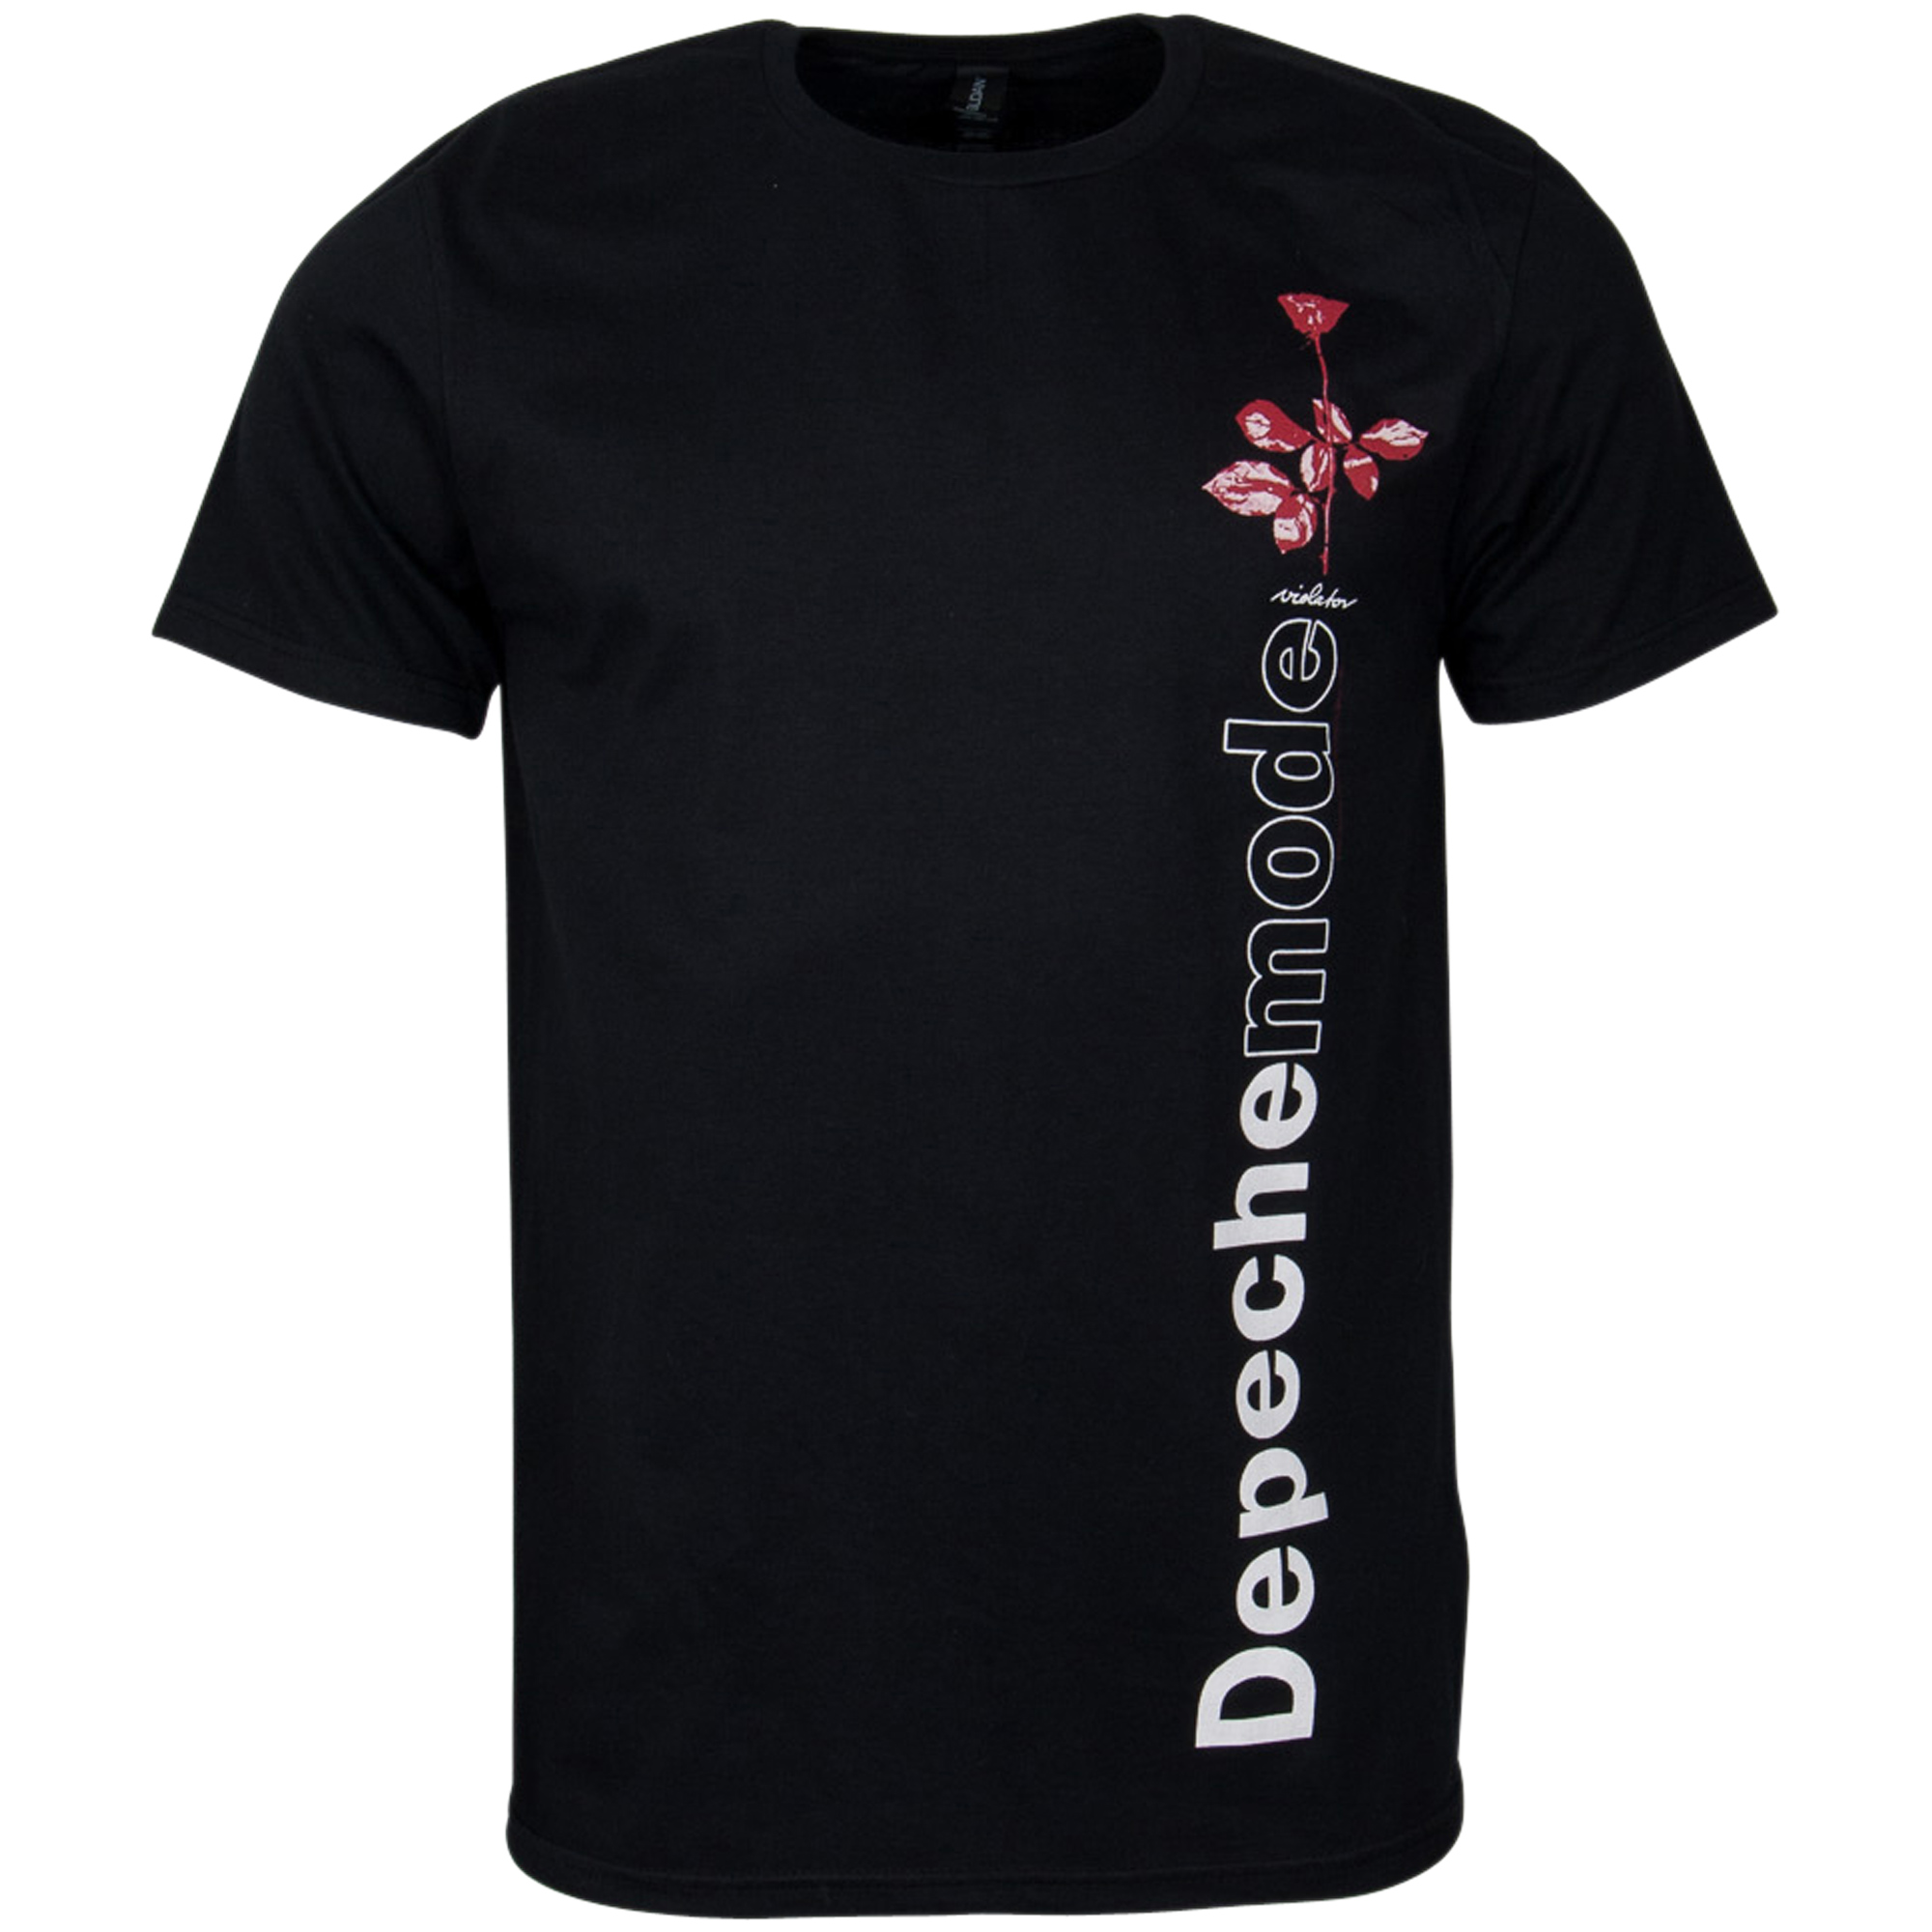 Depeche Mode - T-Shirt Violator Side Rose - schwarz